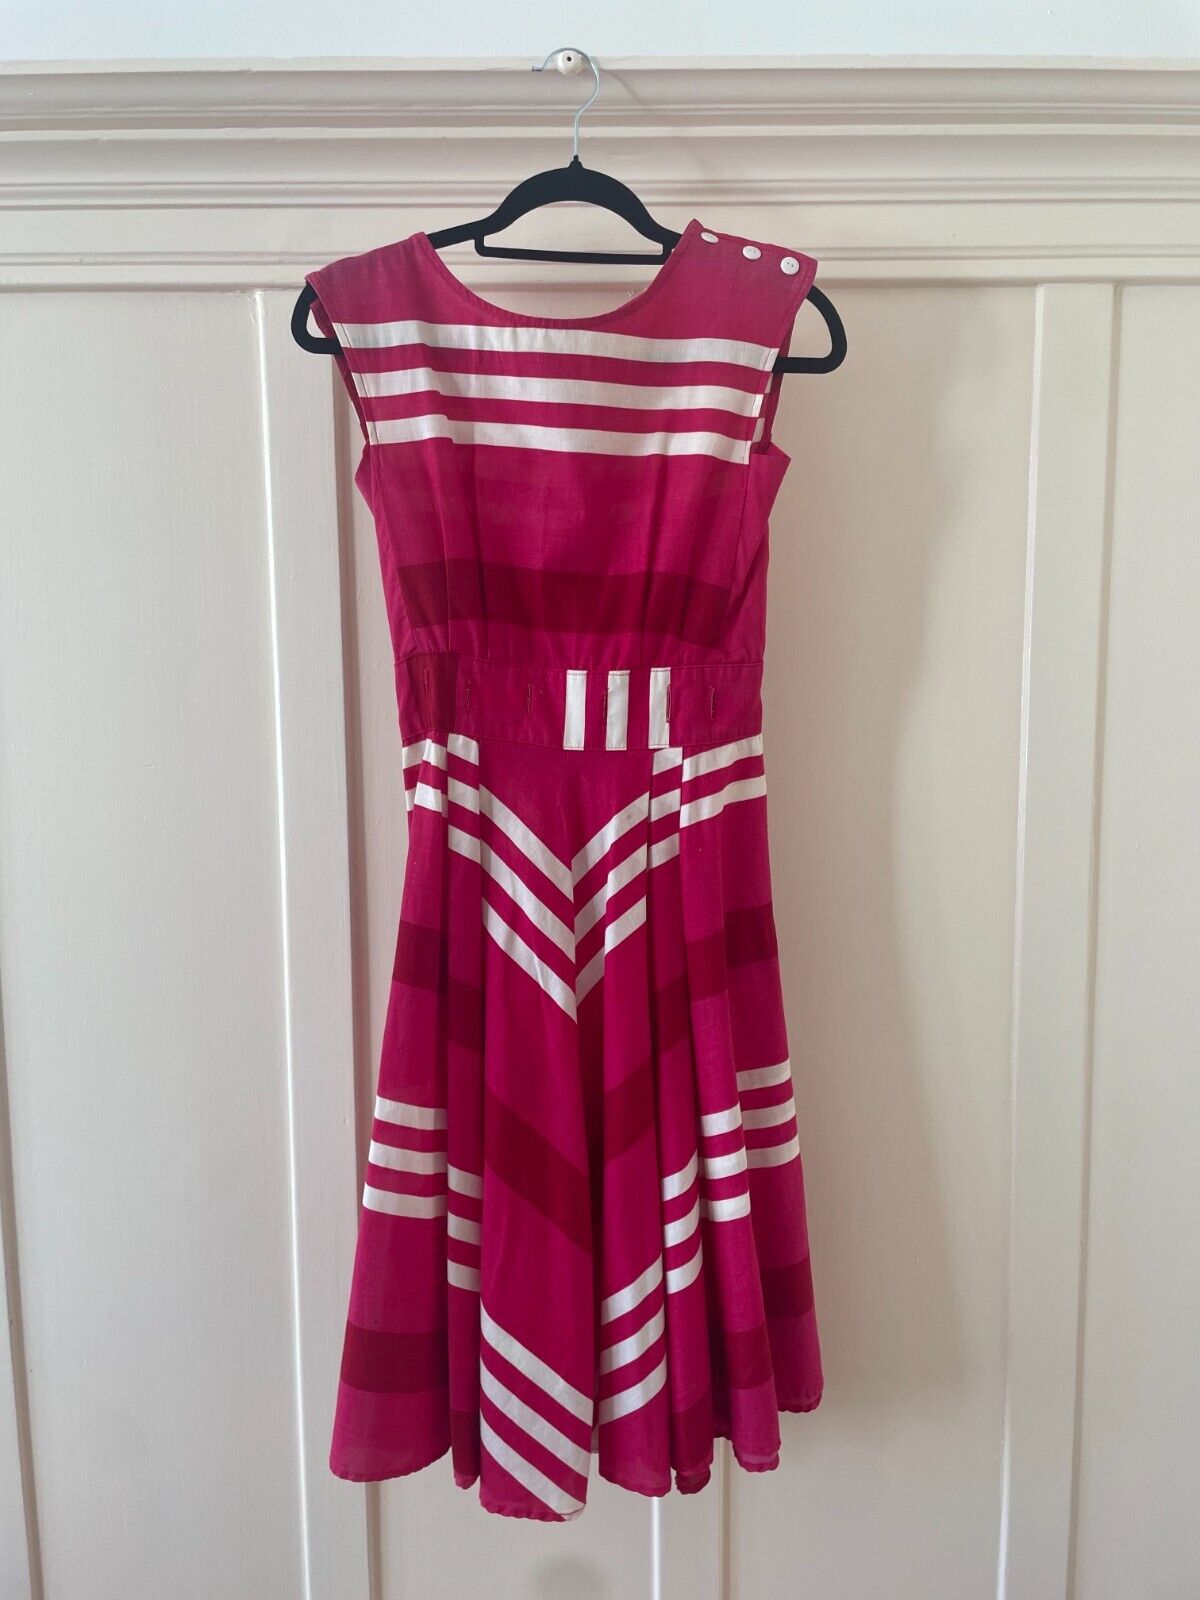 🌺 70s A-Line True Vintage Pink & White Striped Dress SIZE 5 Button Detail 🌺